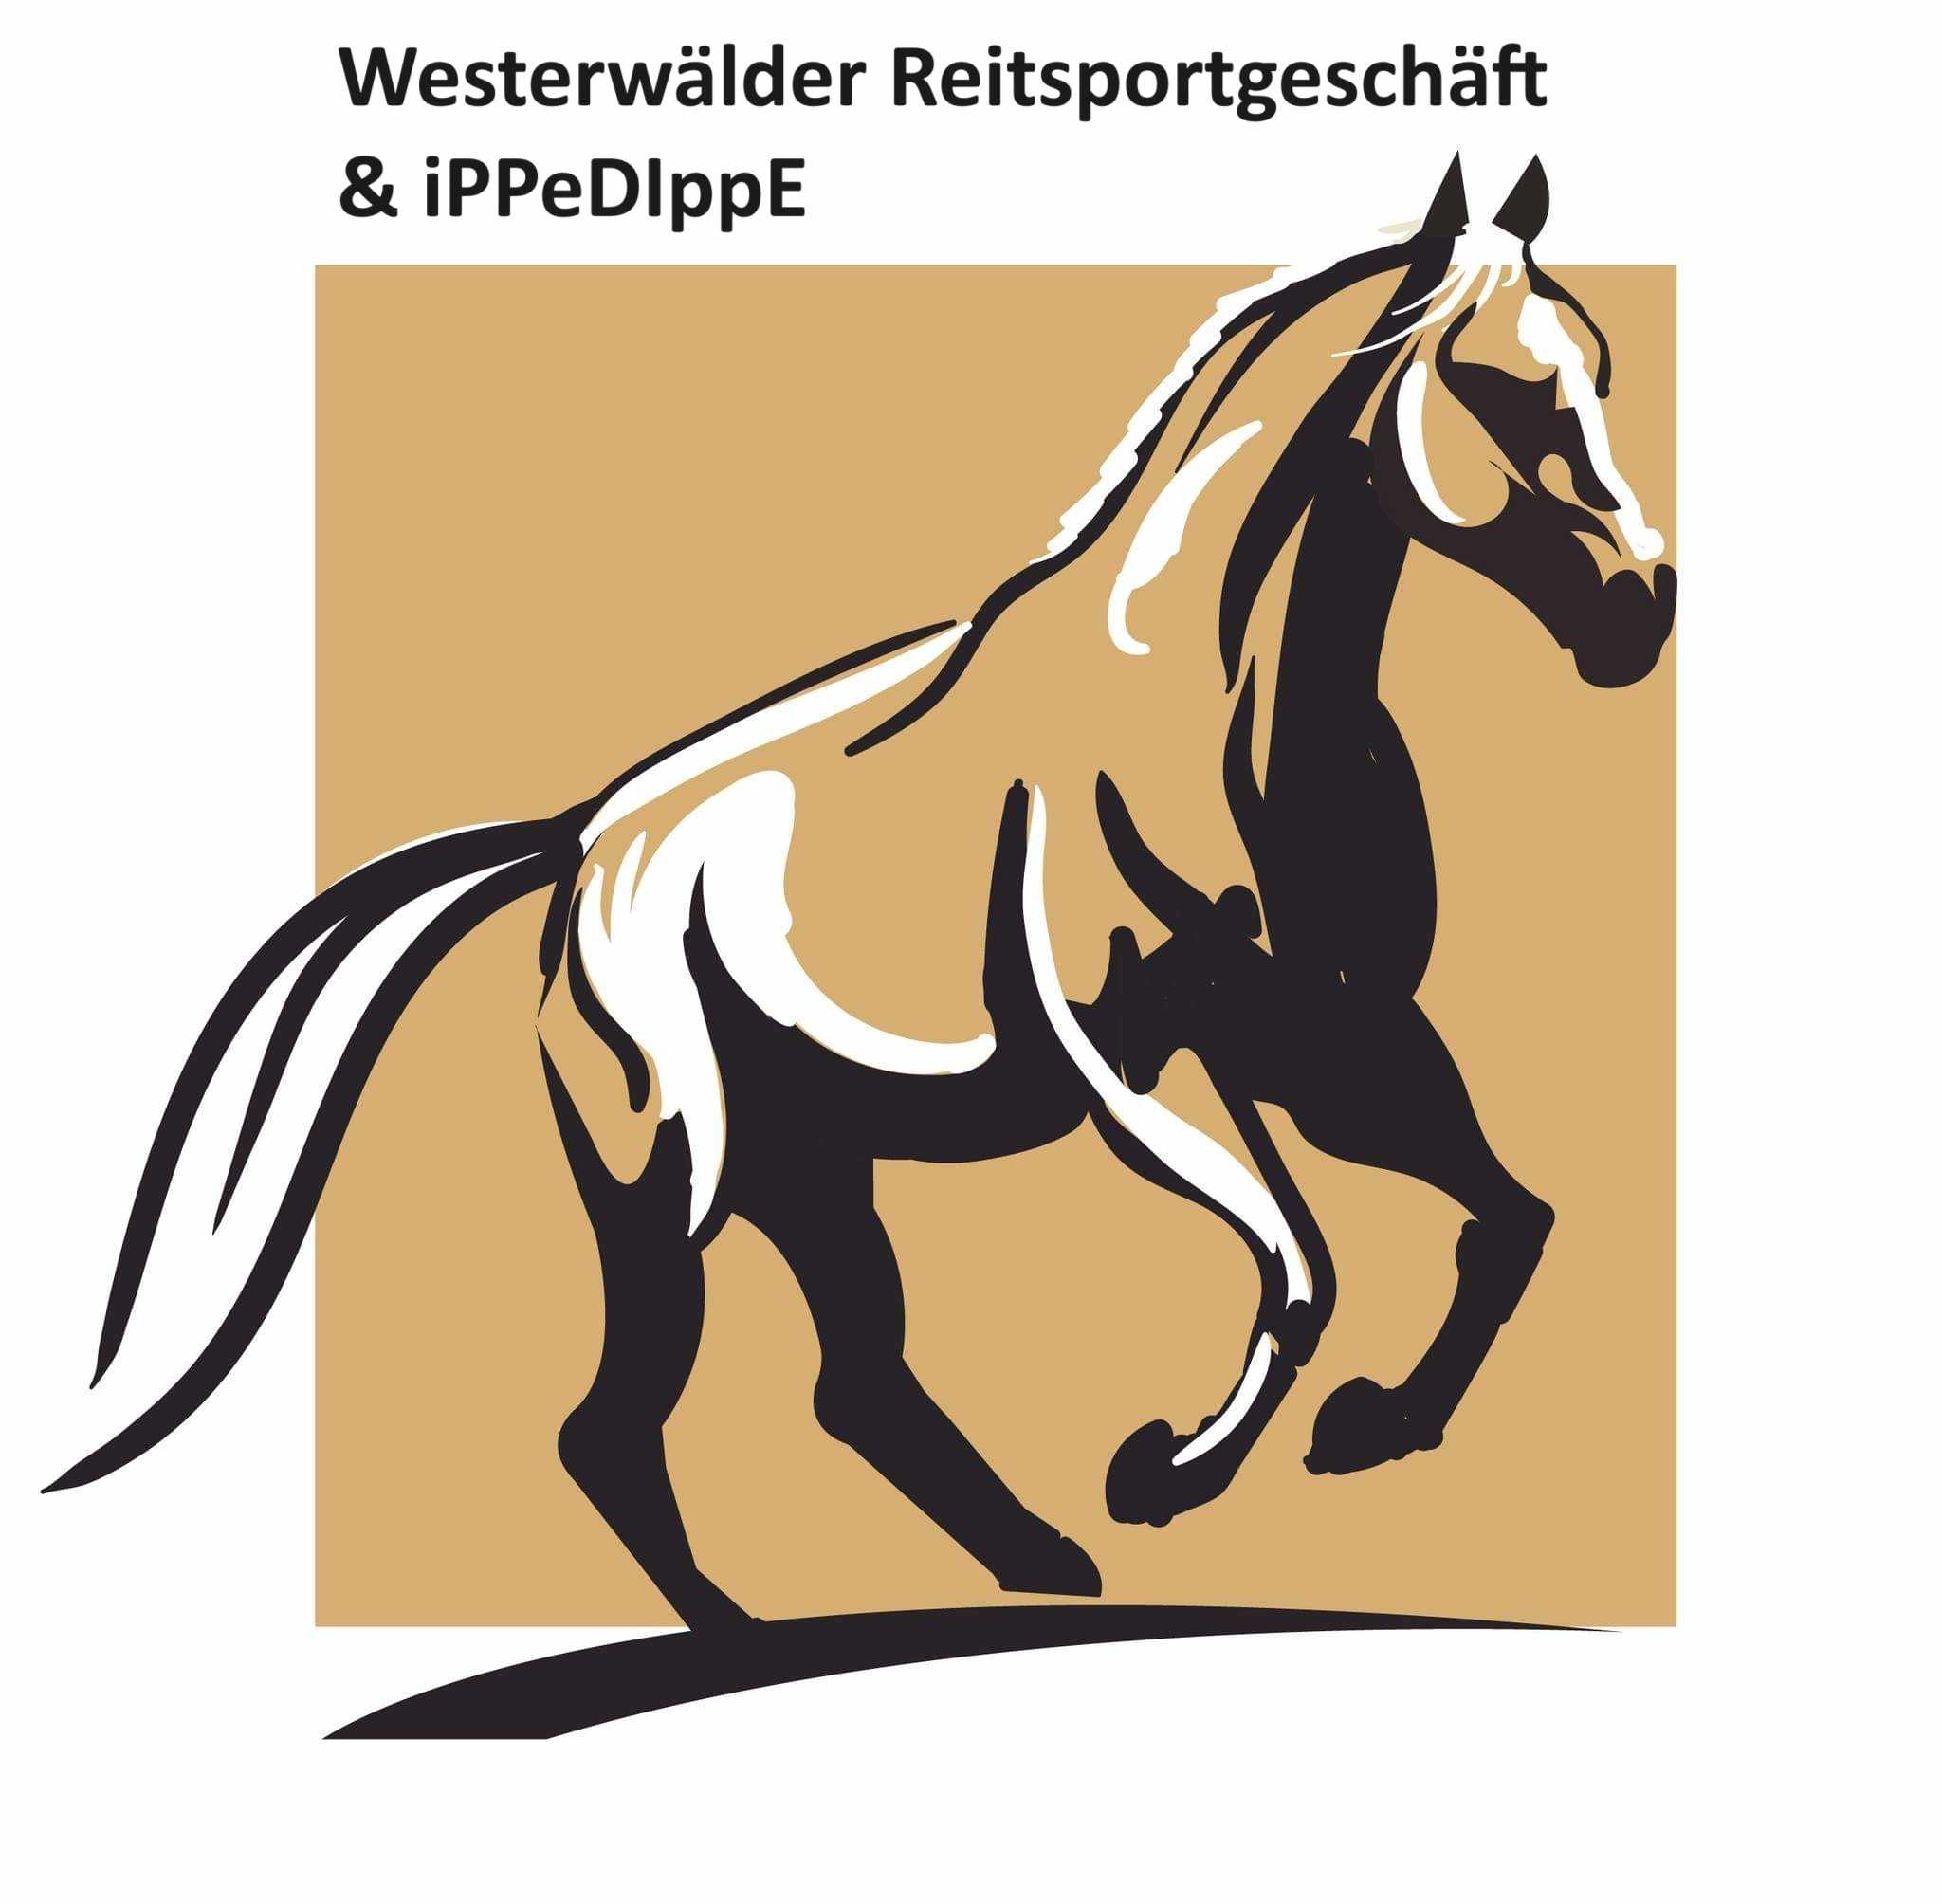 iPPeDIppE & Westerwälder Reitsportgeschäft